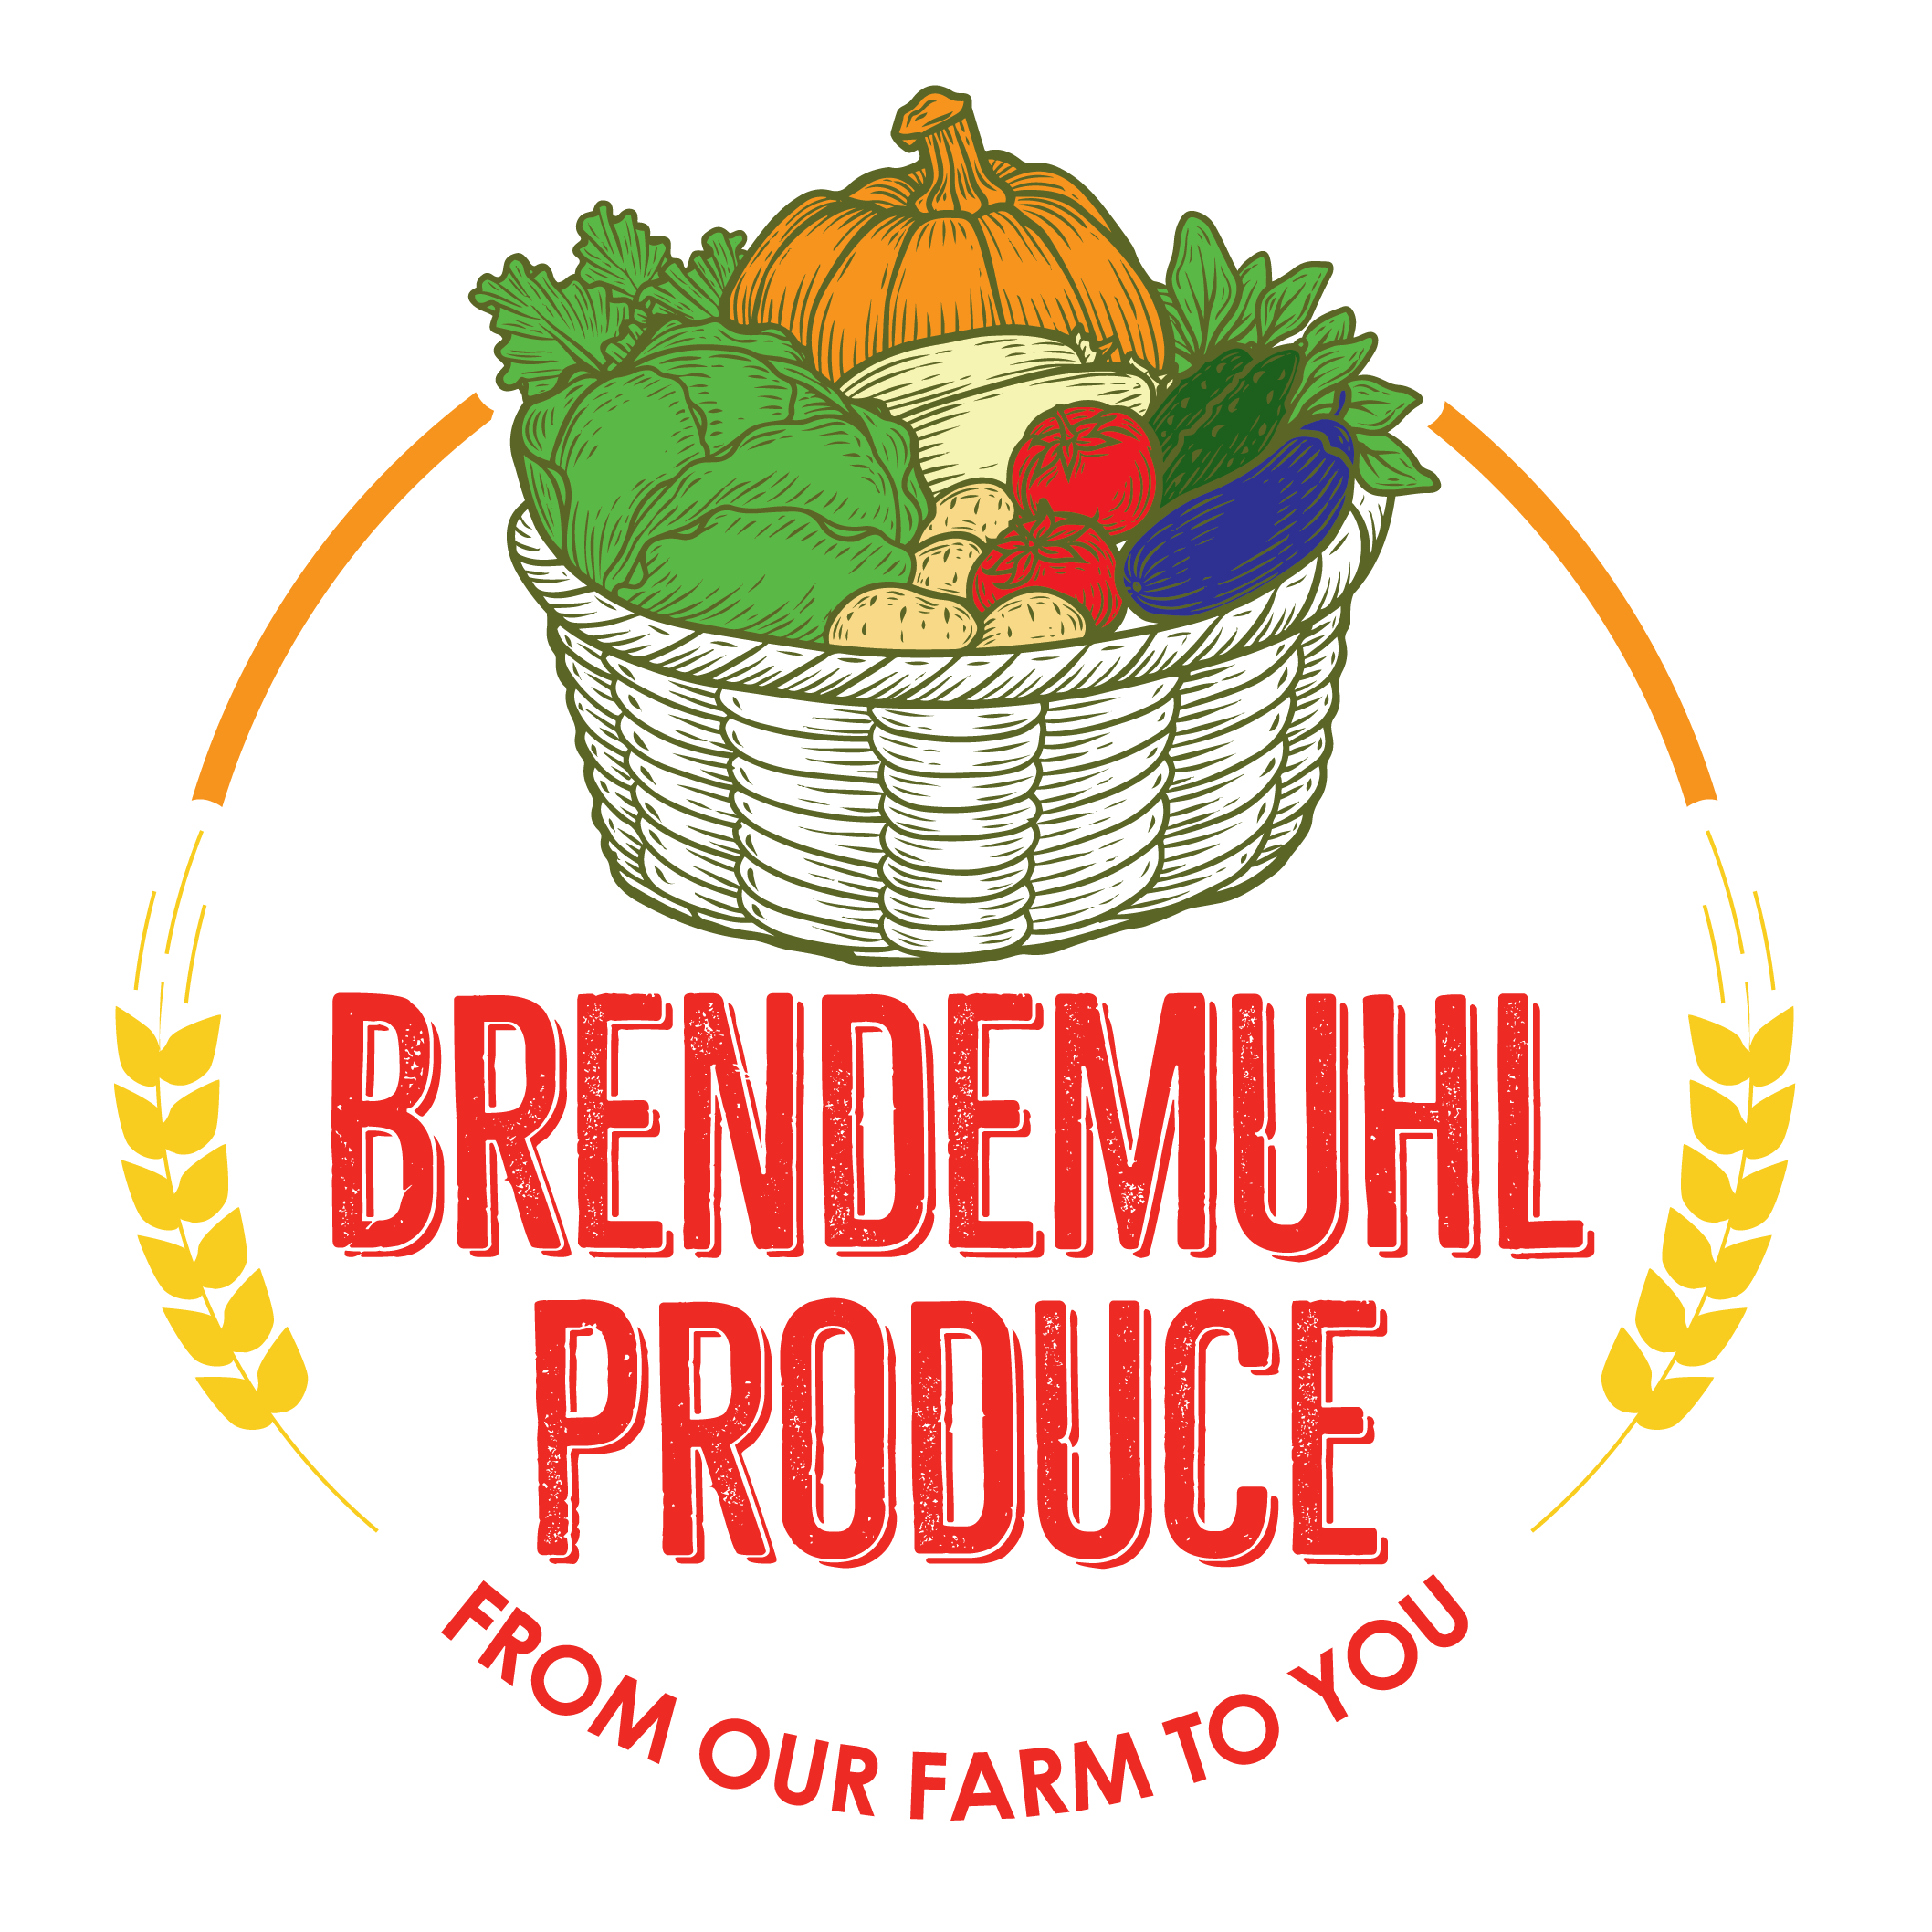 Brendemuhl Produce